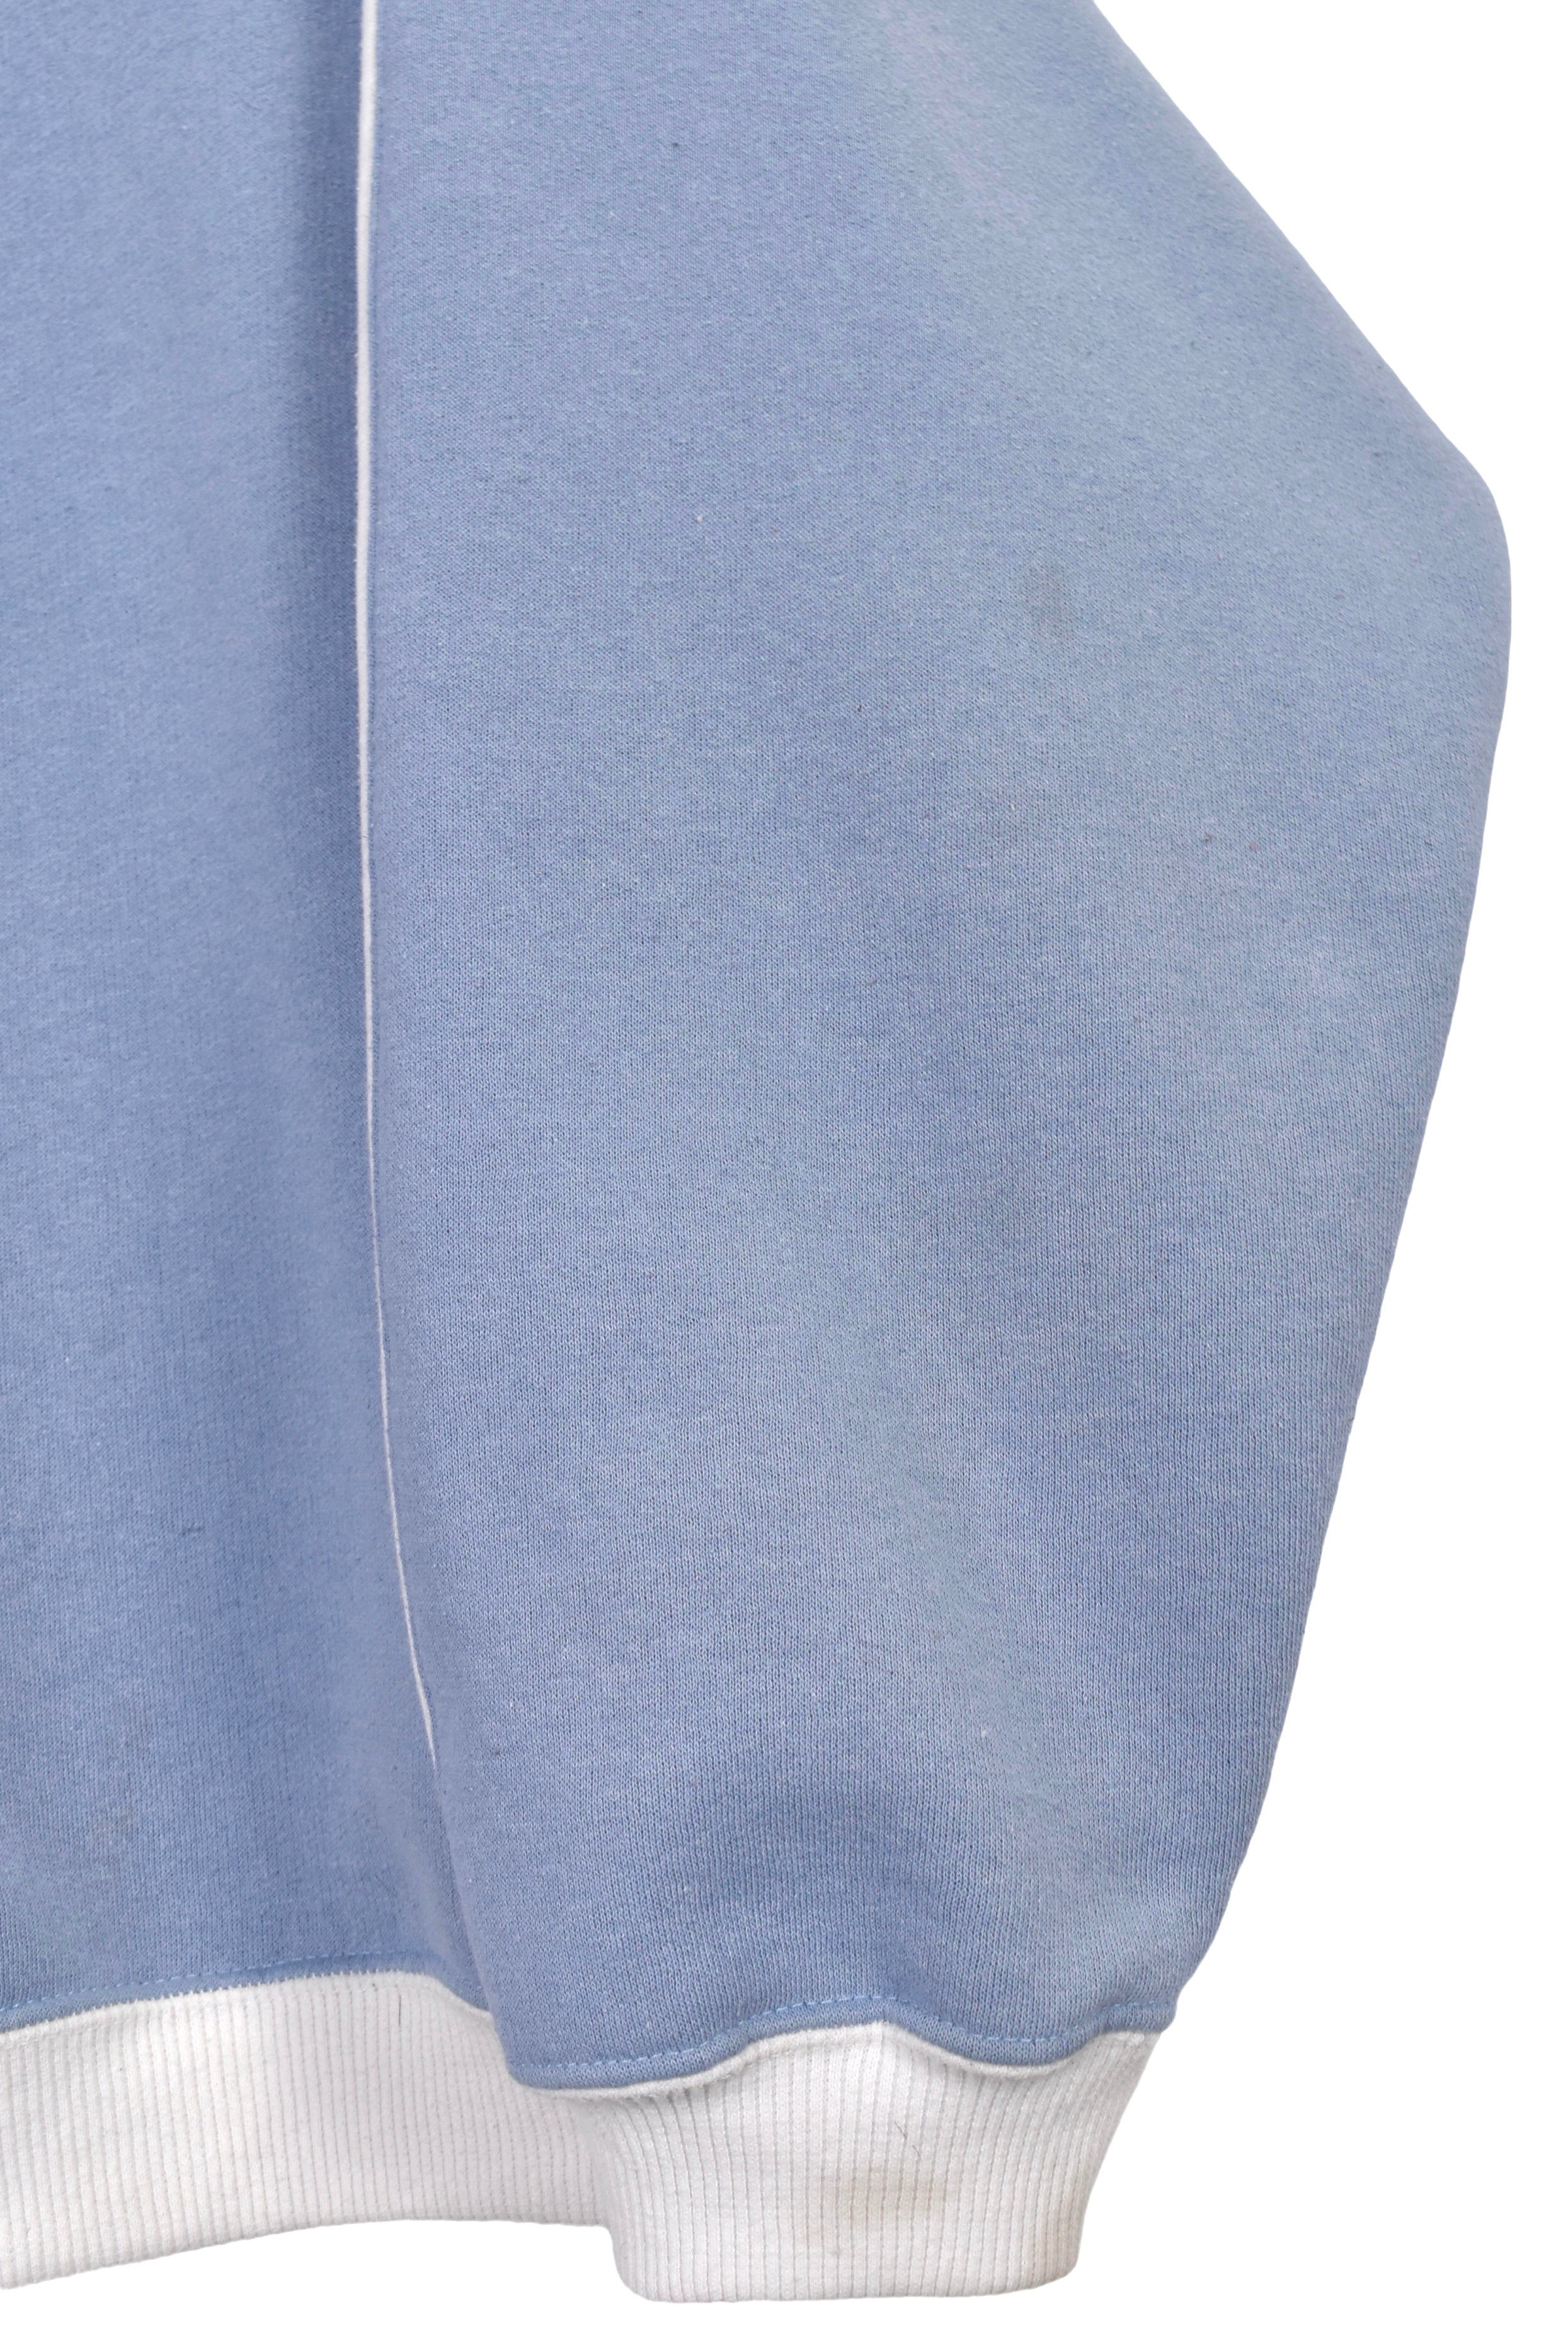 Womens vintage Nike sweatshirt, blue embroidered crewneck - Large